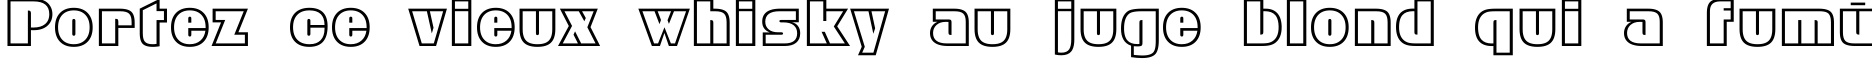 Пример написания шрифтом GeoC текста на французском